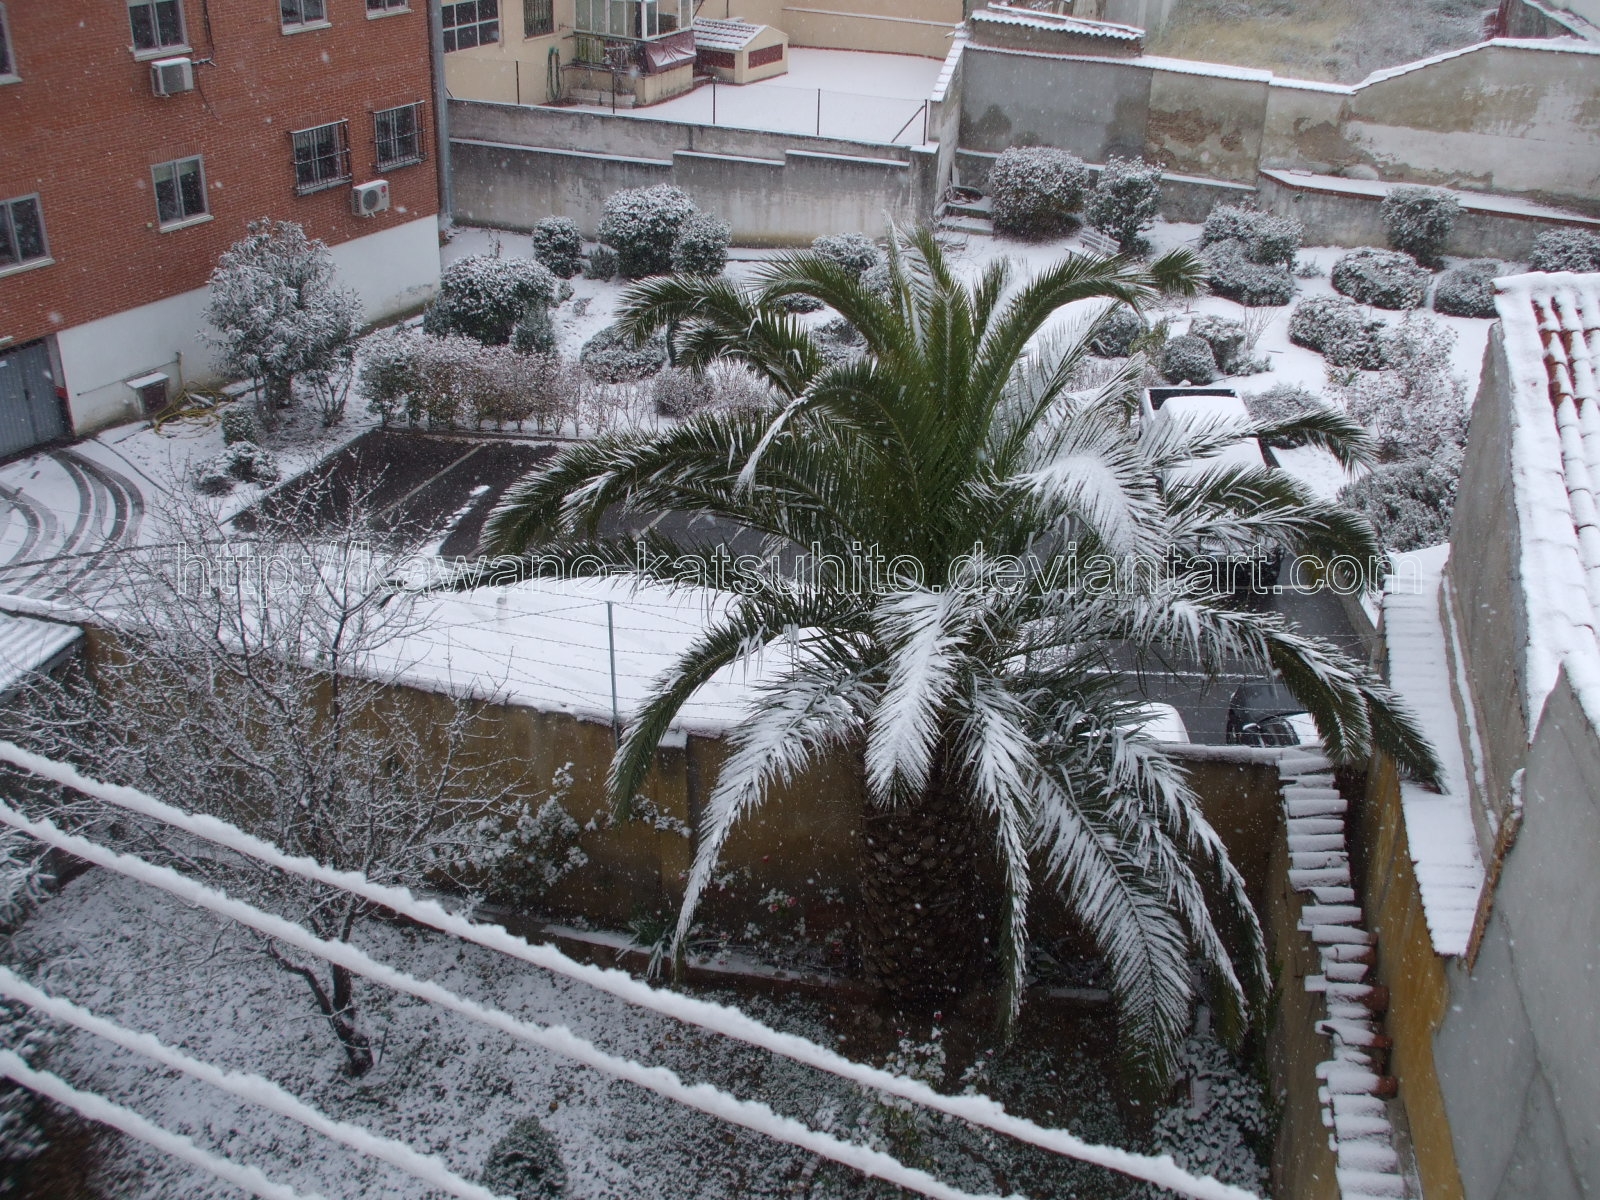 Snow in Madrid, 9-1-2009: 2